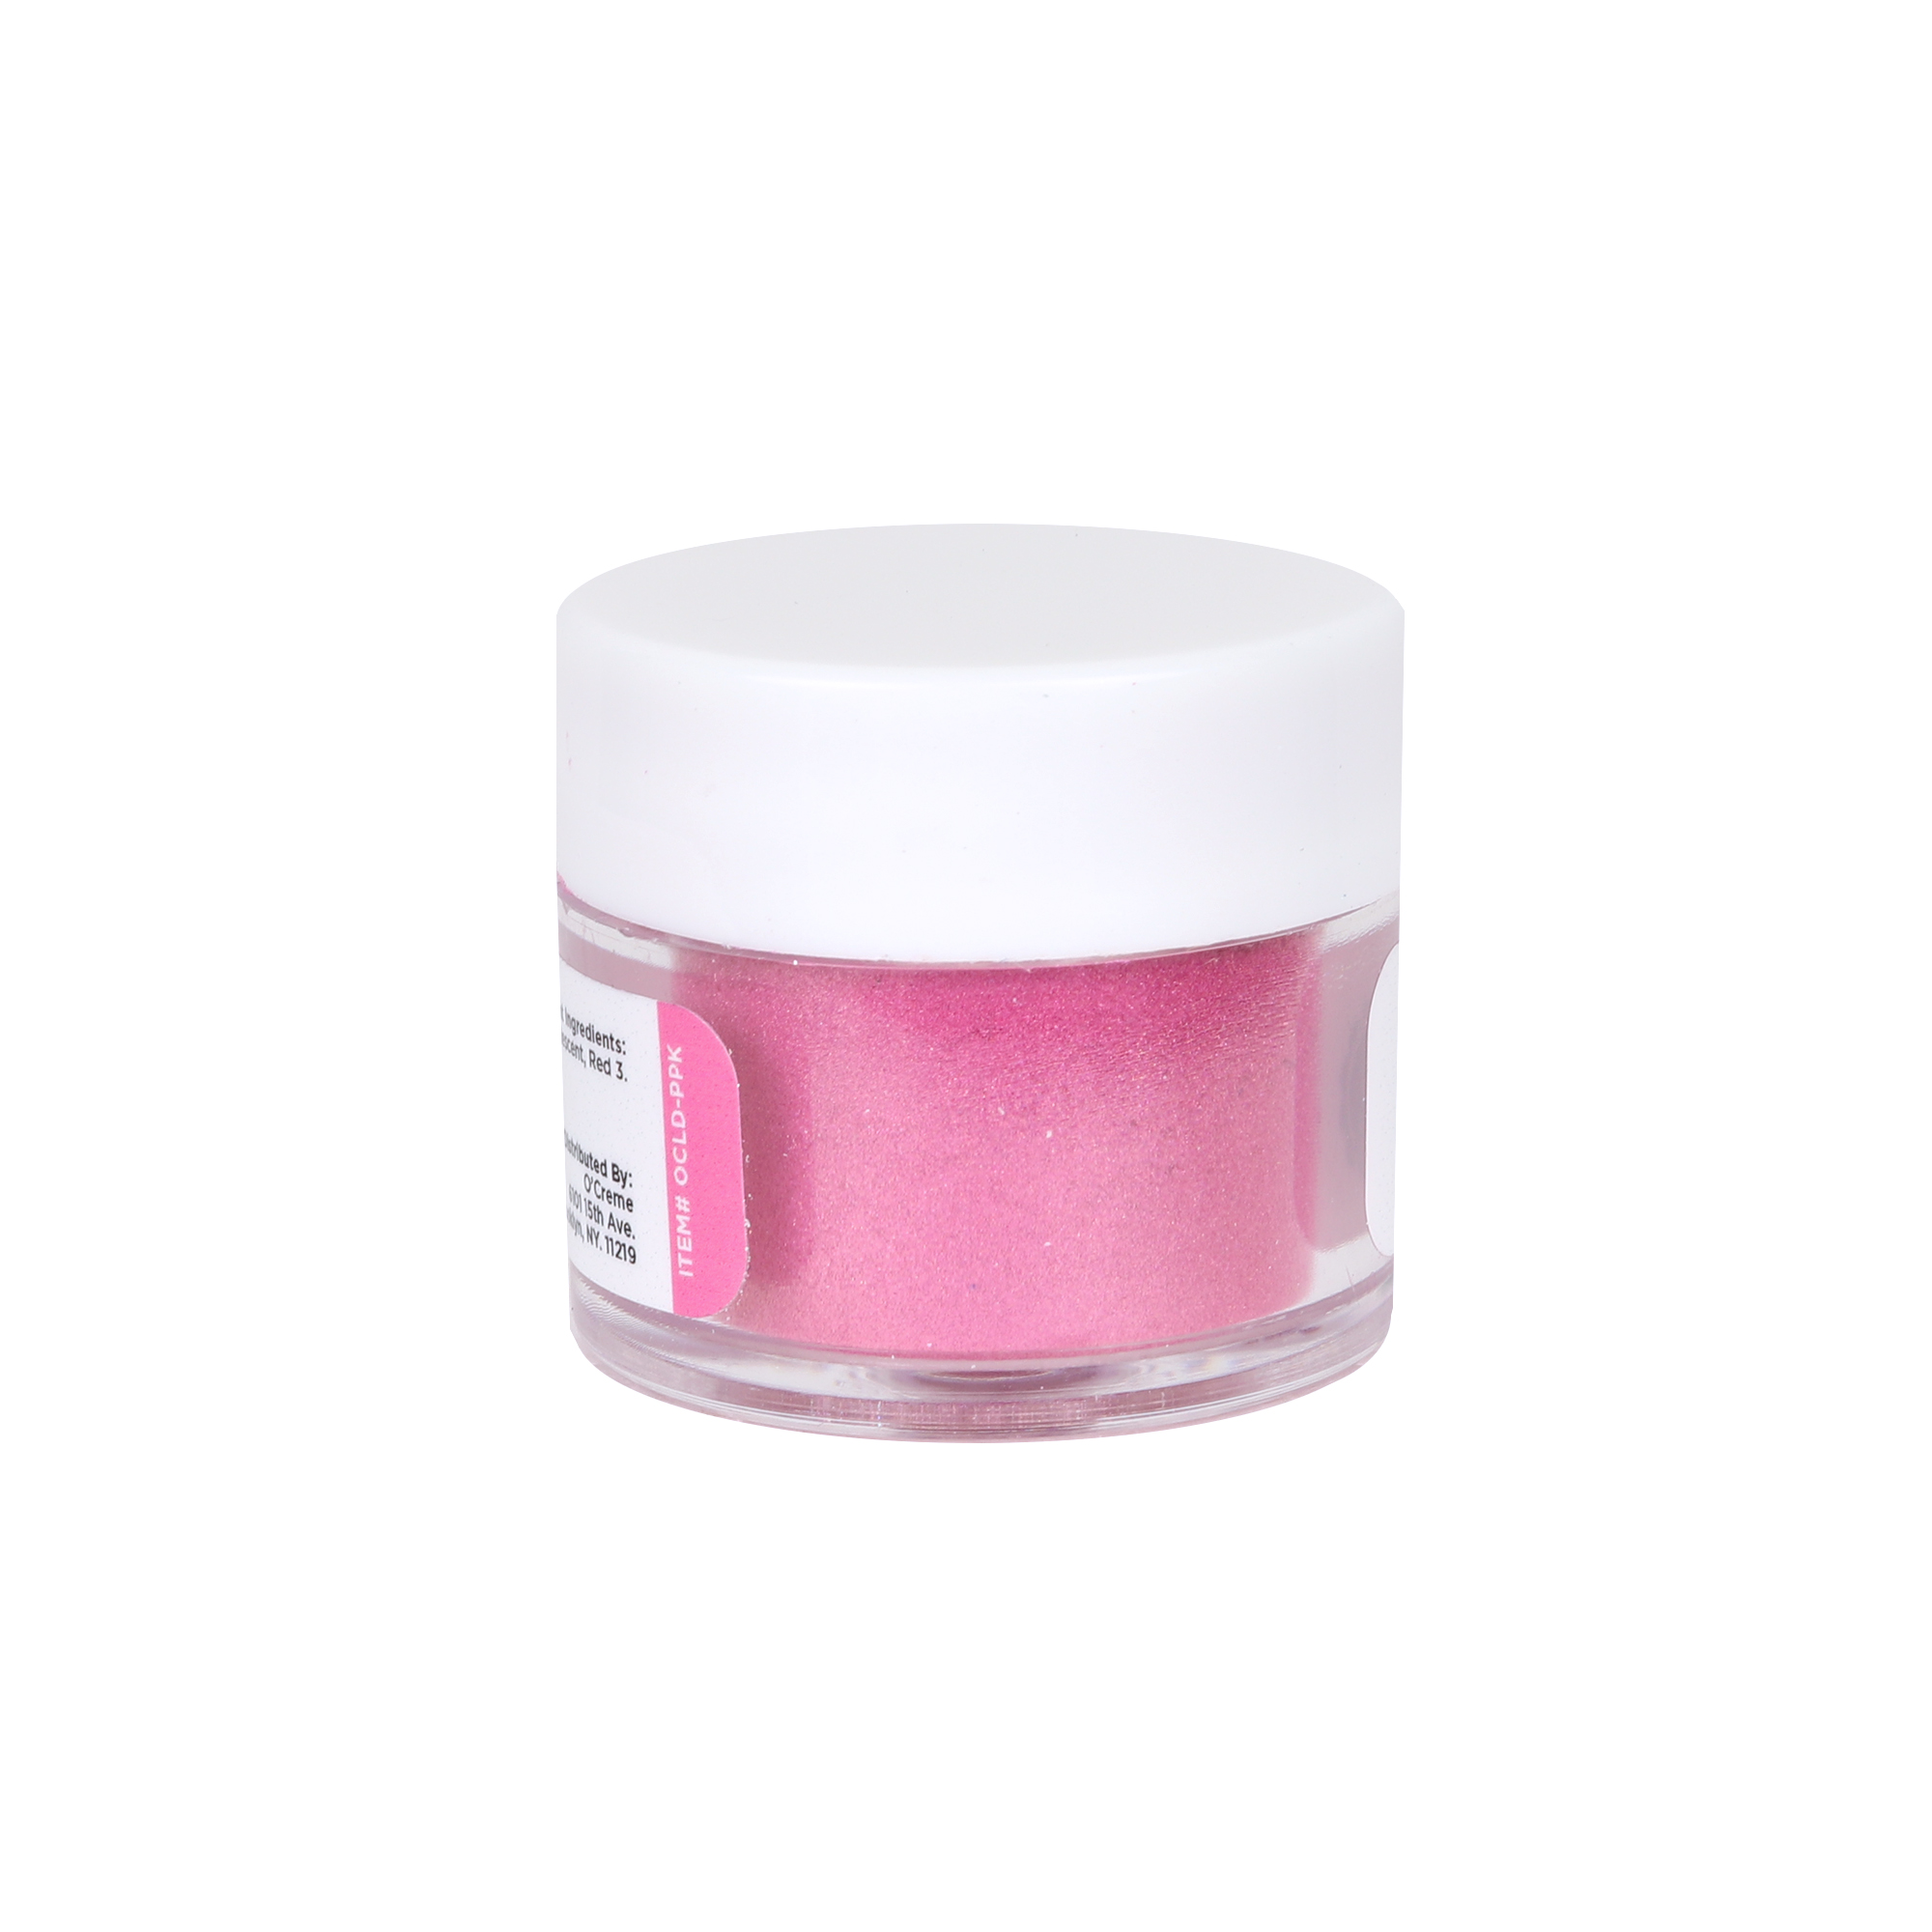 O'Creme Pink Pink Luster Dust, 4 gr. image 2